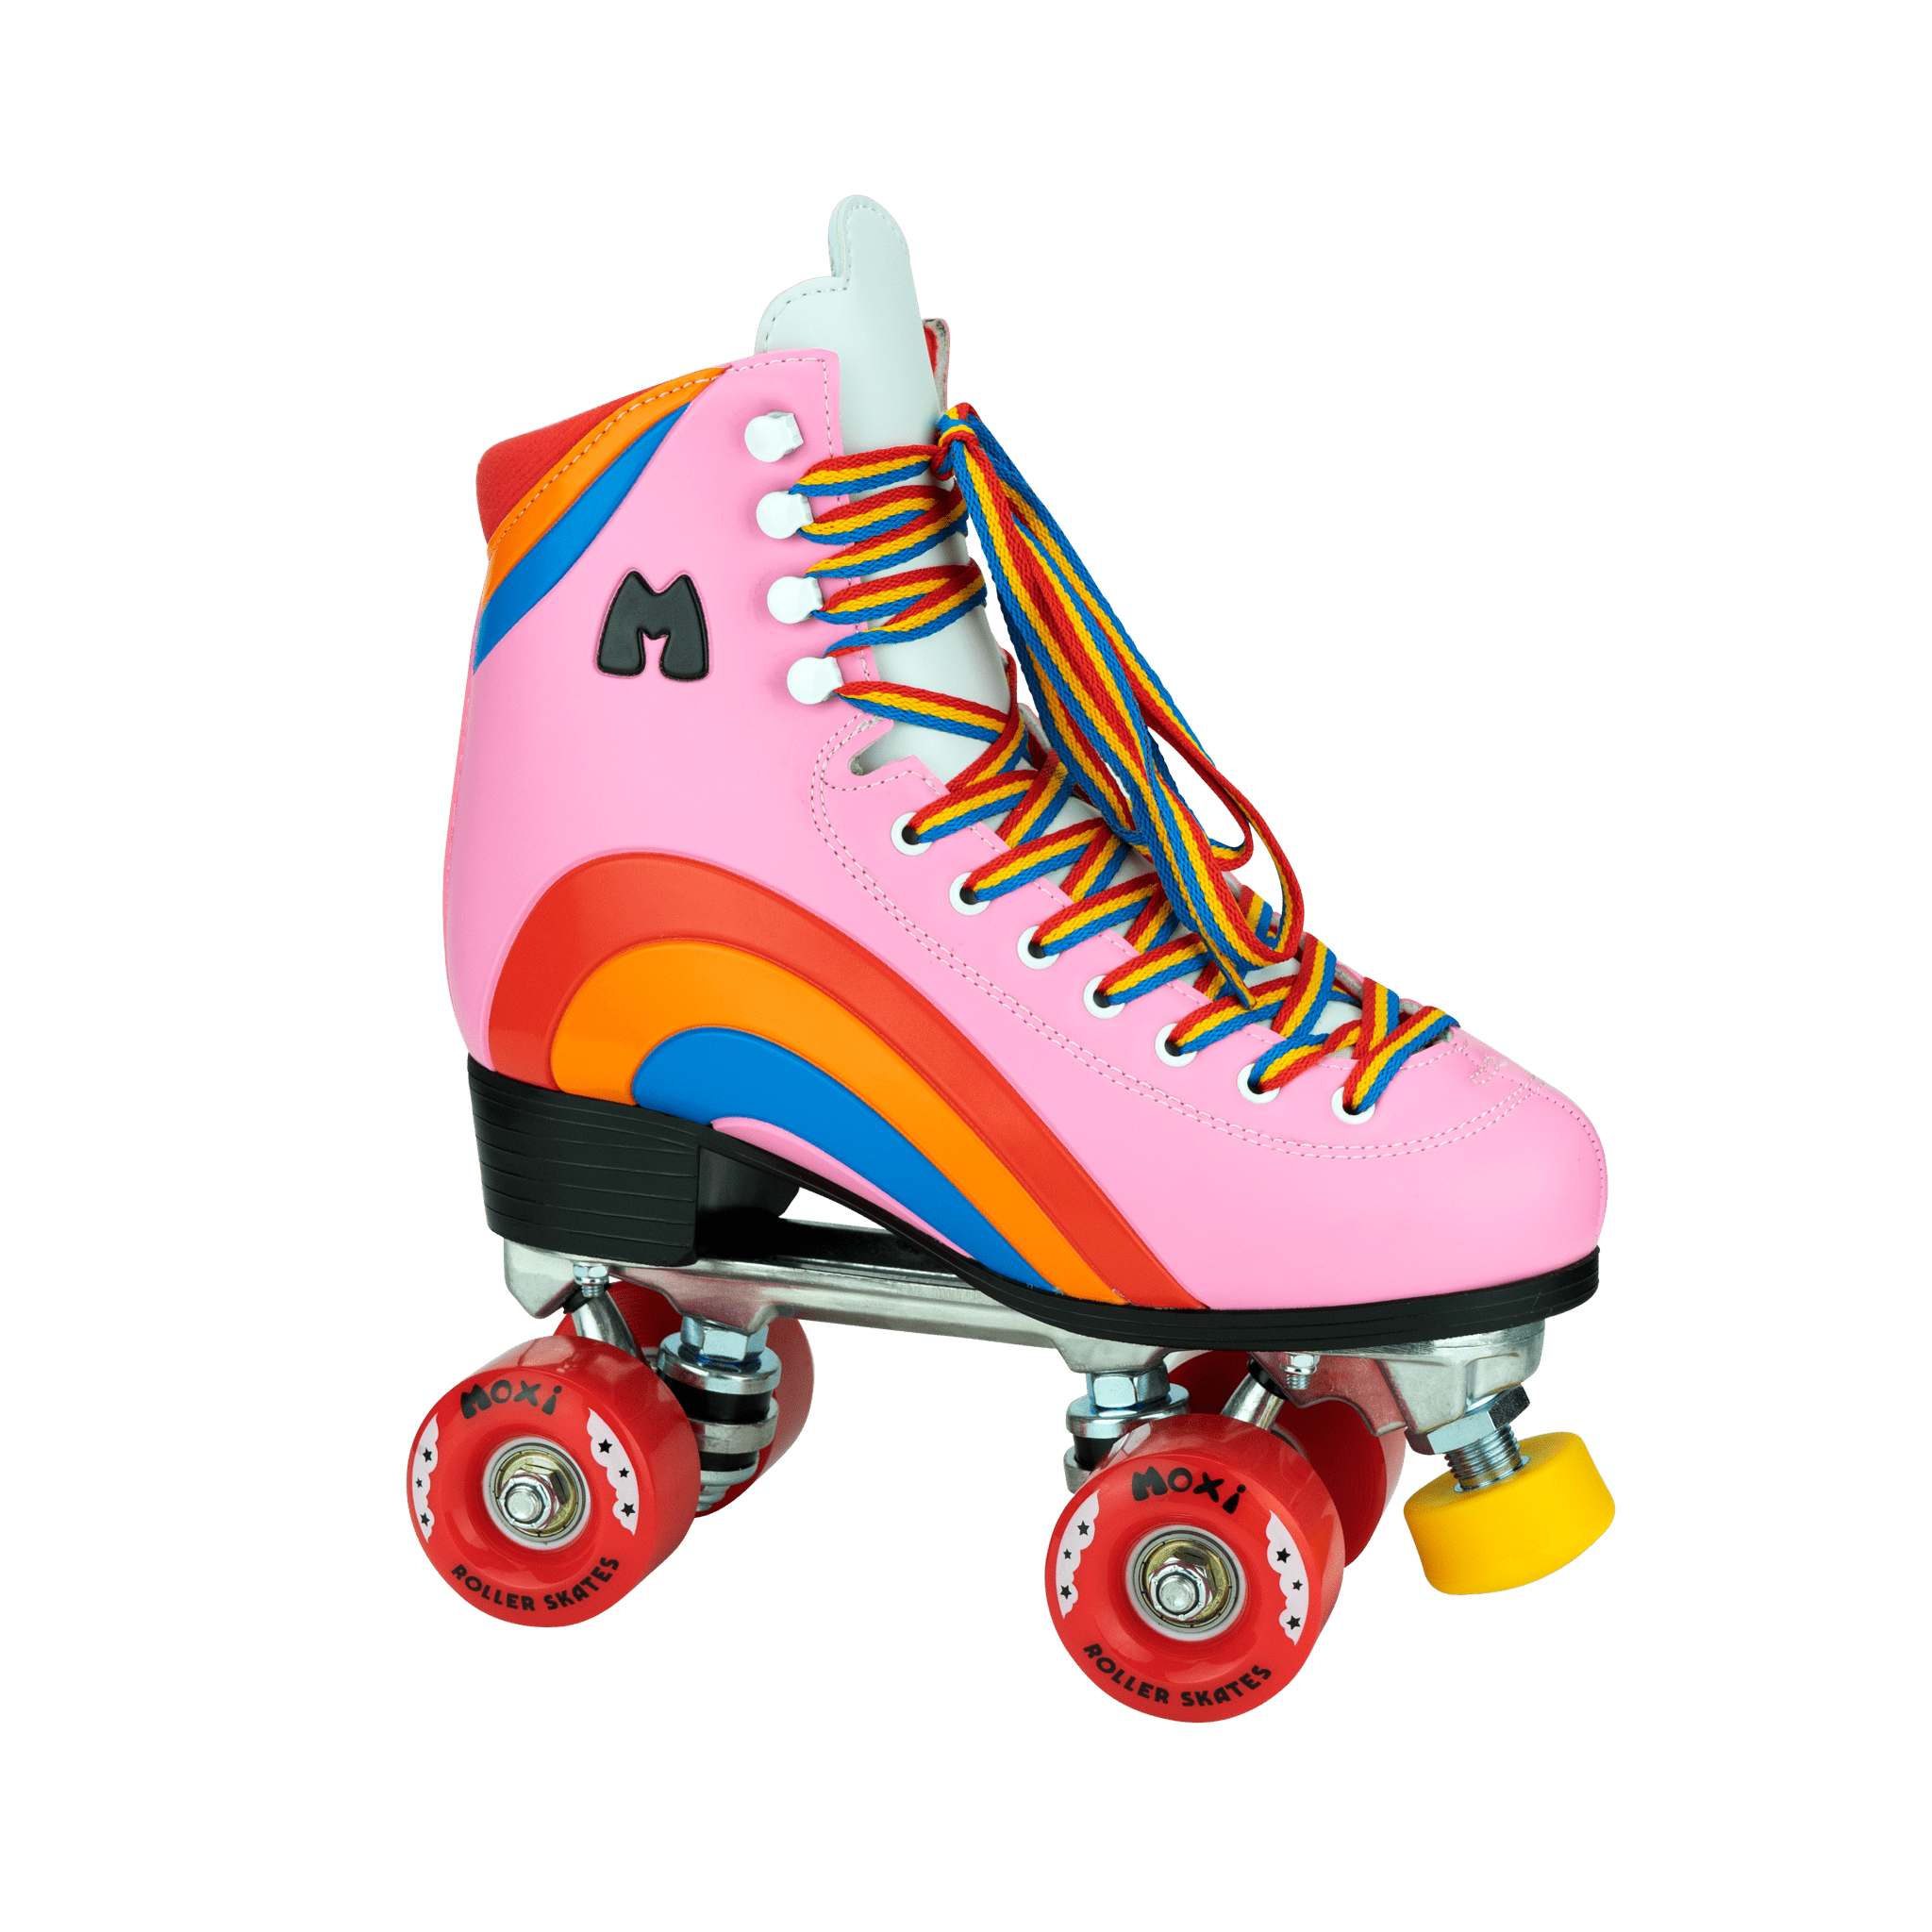 Moxi Rainbow Rider Pink Roller Skates, Intuition Skate Shop, Skate Shops Near Me